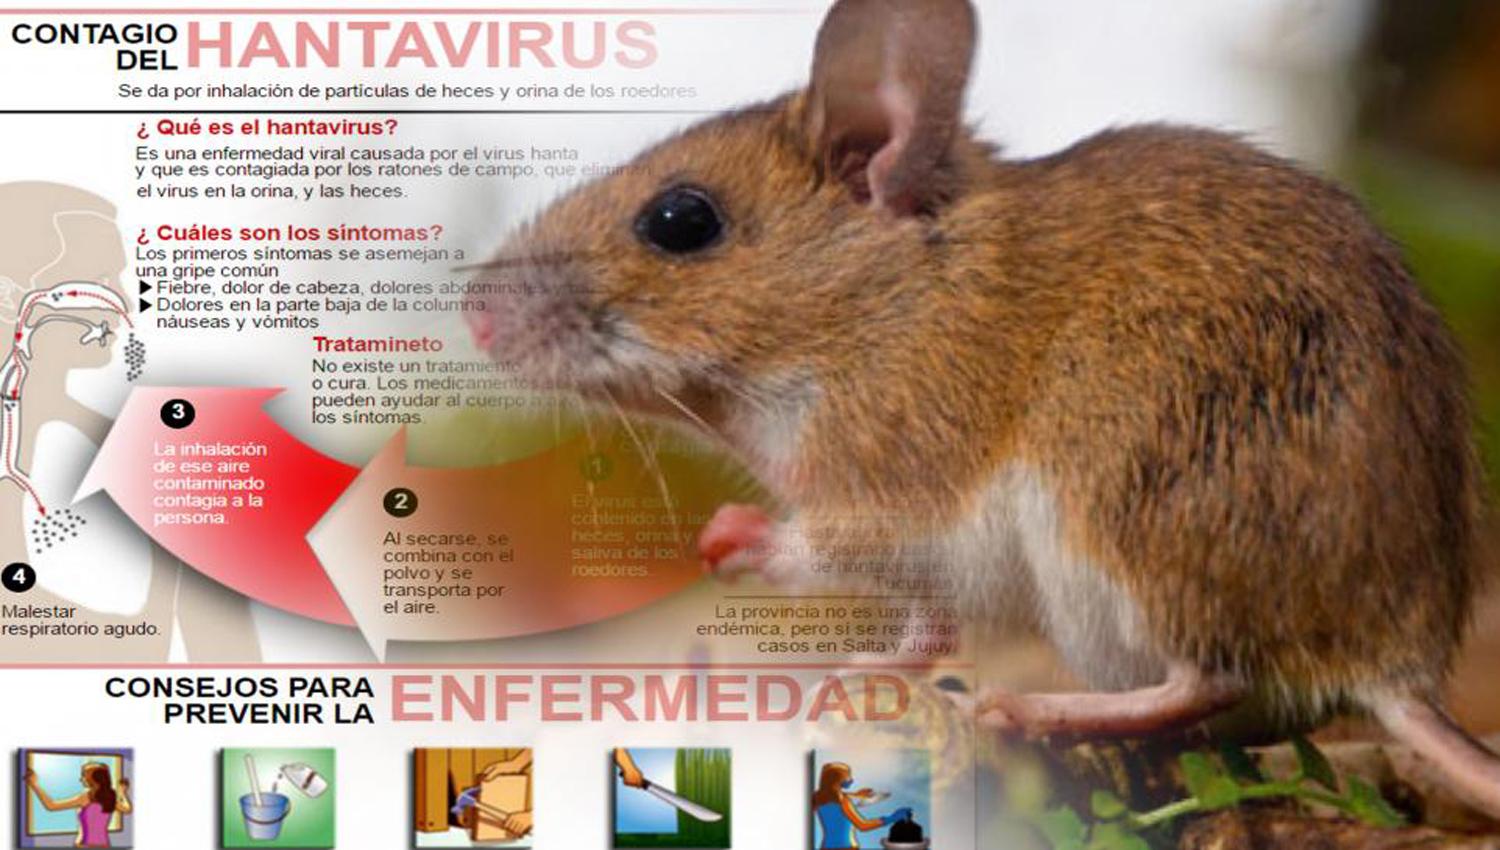 Octavo caso de hantavirus en Buenos Aires: Tucumán continúa exento del virus